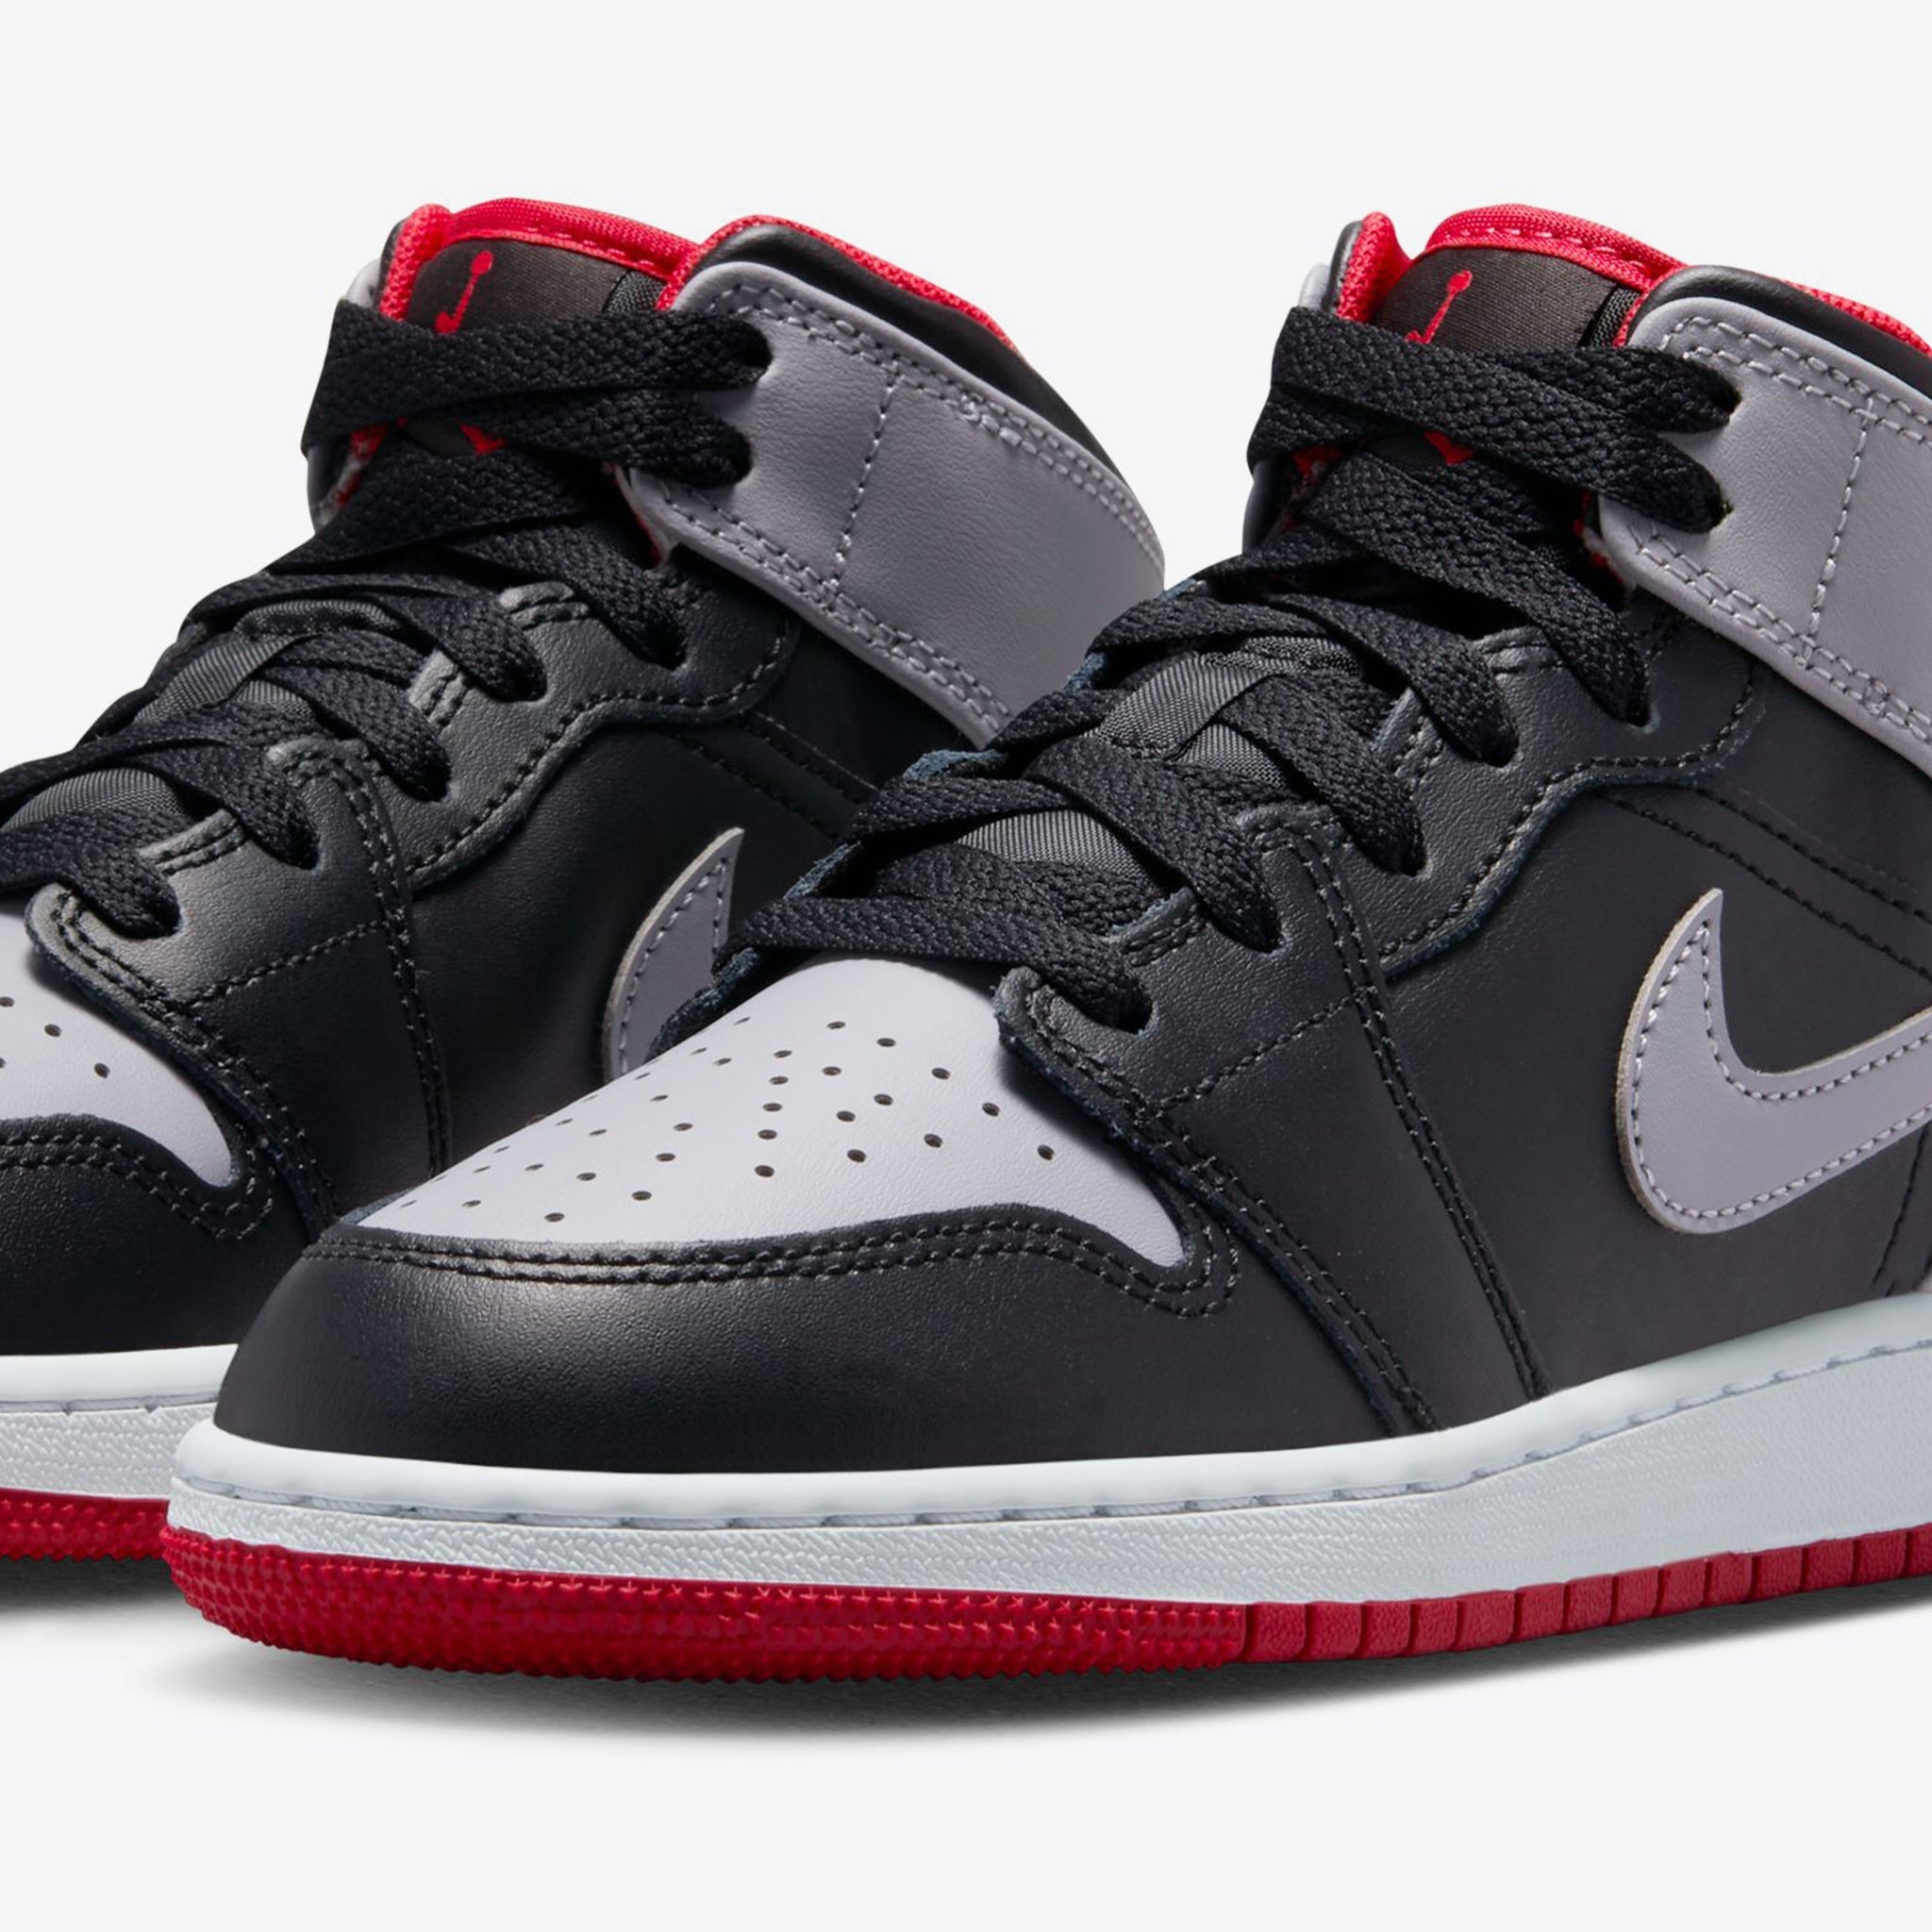 Nike Jordan Jayson Tatum Black, Grey and Red Basketball Sneakers